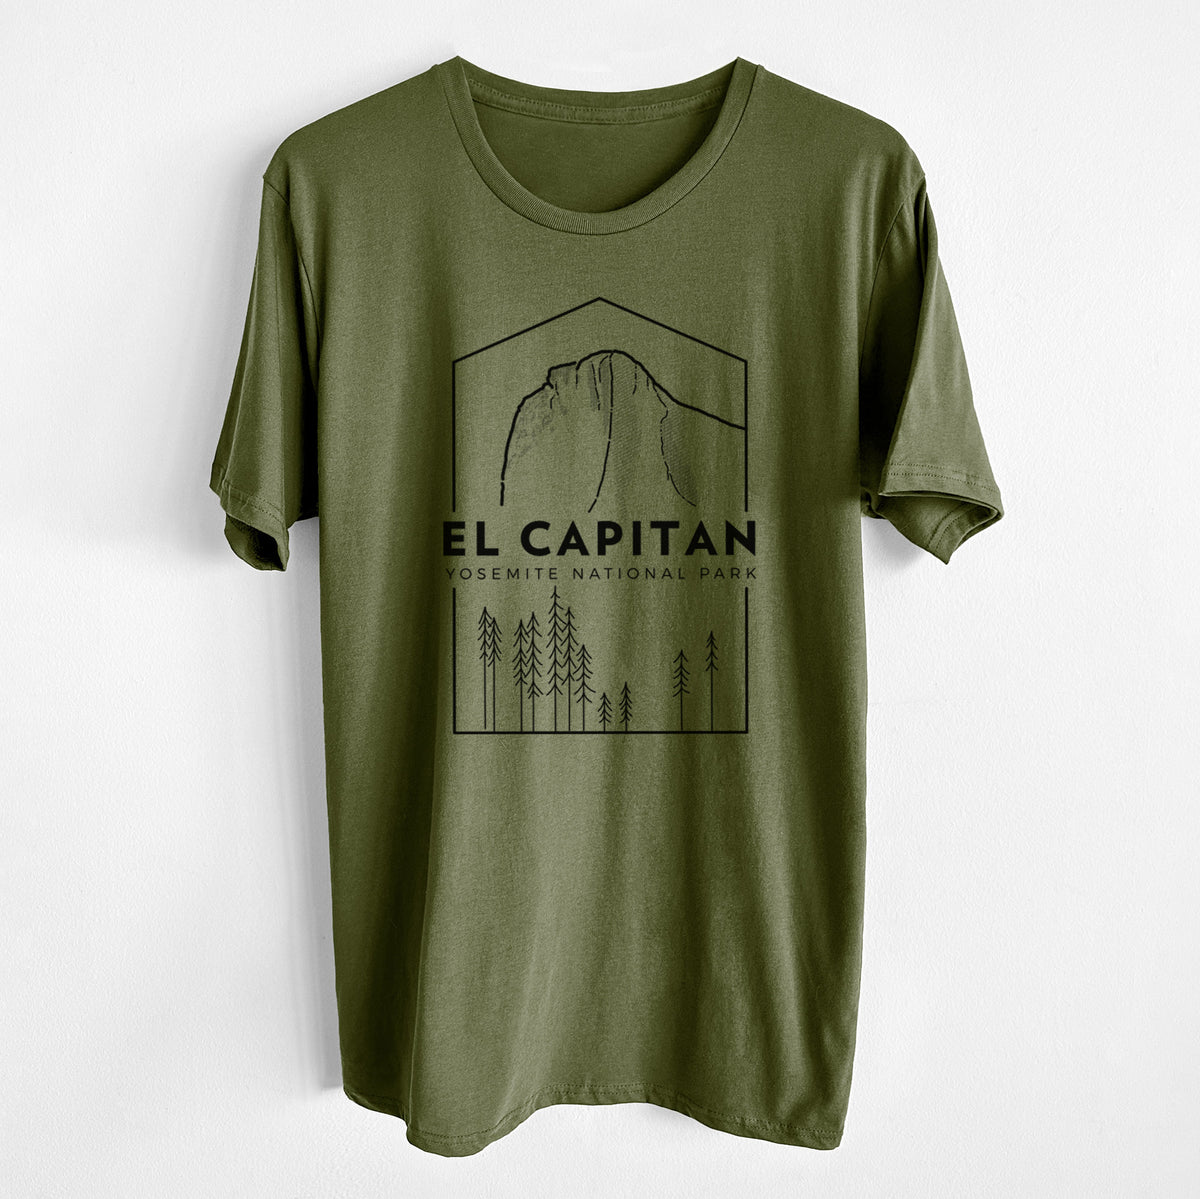 El Capitan - Yosemite National Park - Unisex Crewneck - Made in USA - 100% Organic Cotton